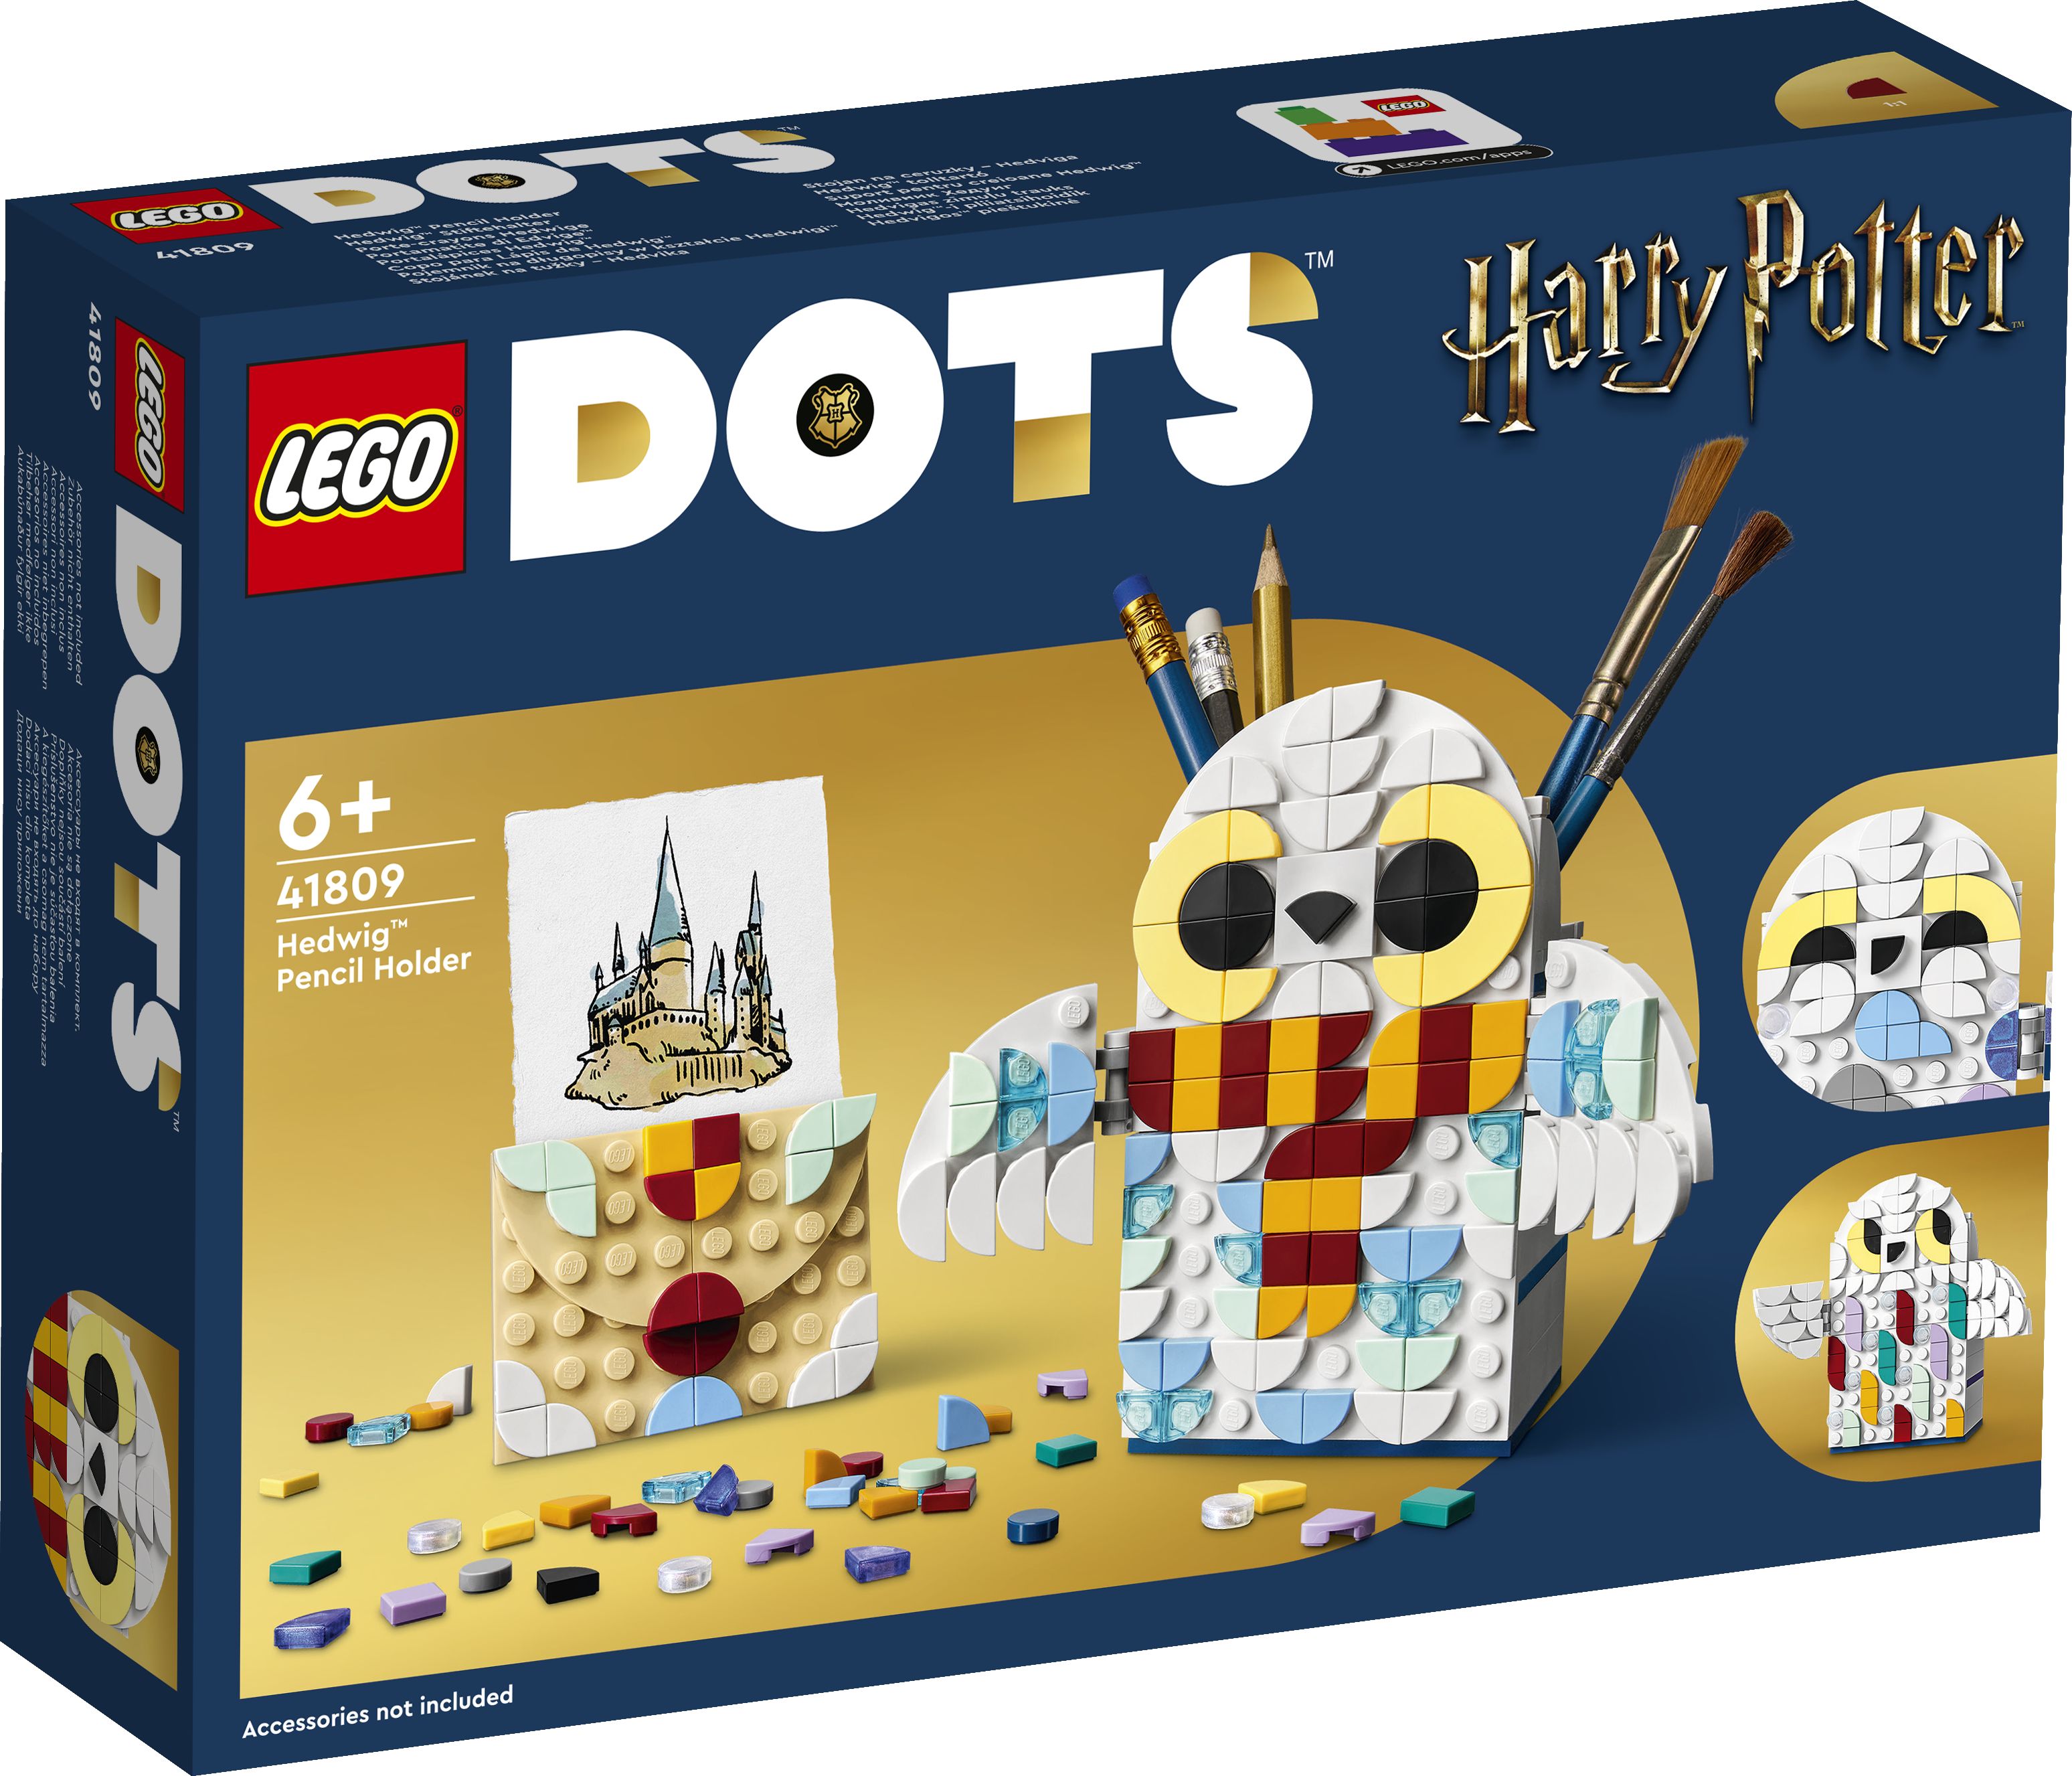 LEGO Dots 41809 Hedwig™ Stiftehalter LEGO_41809_Box1_v29.jpg